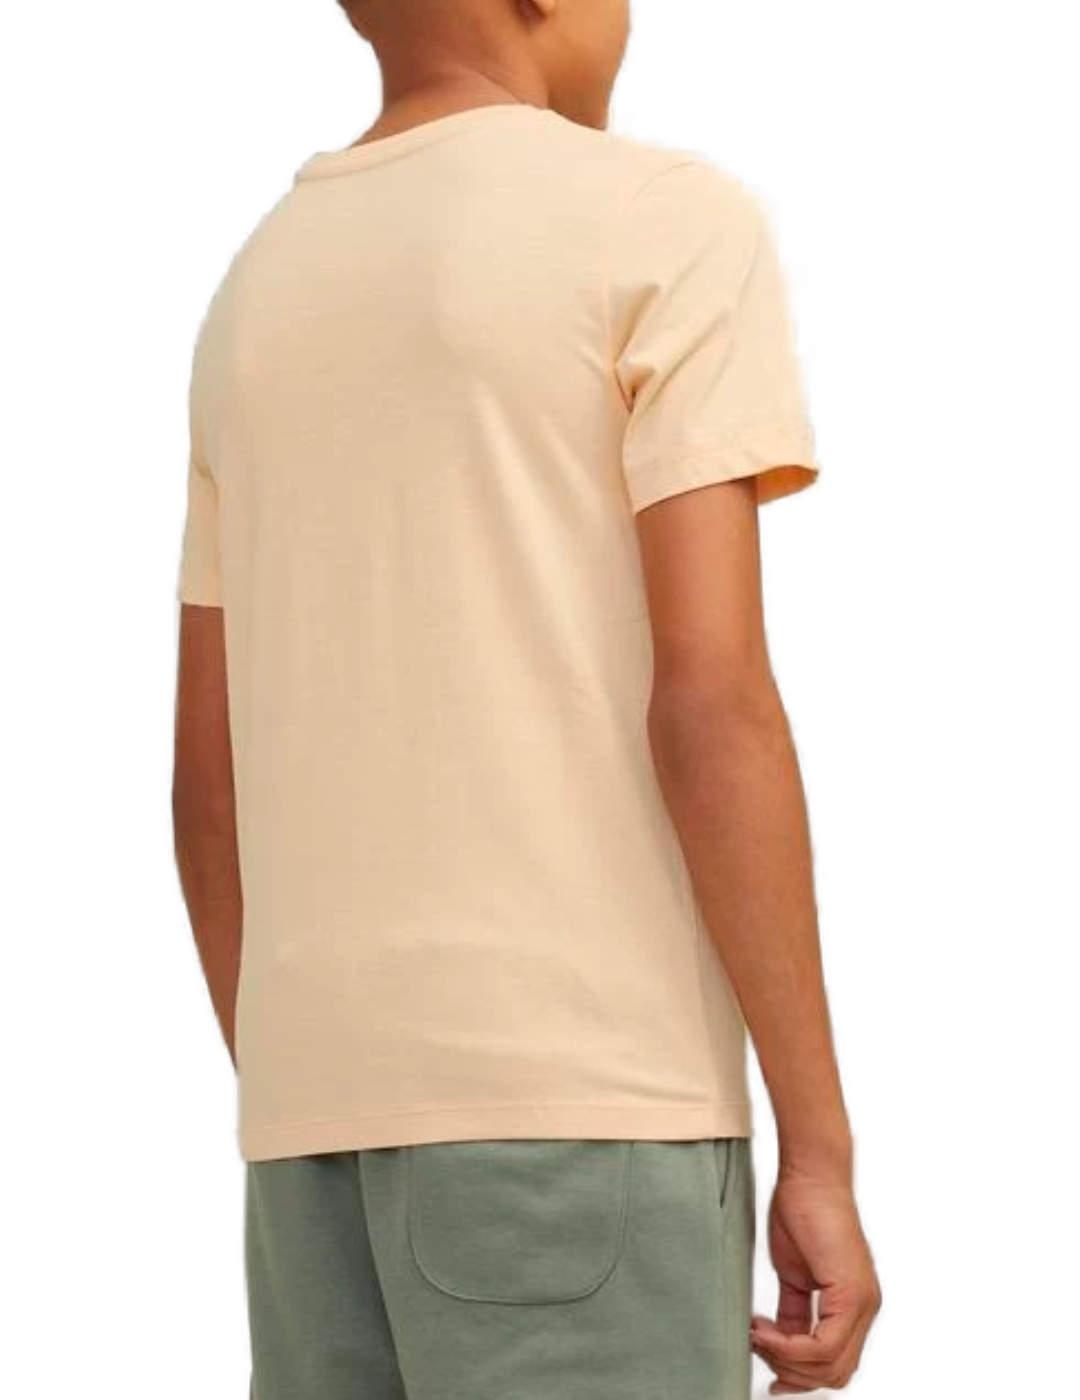 Camiseta Jack&Jones Junior Zipon naranja manga corta de niño